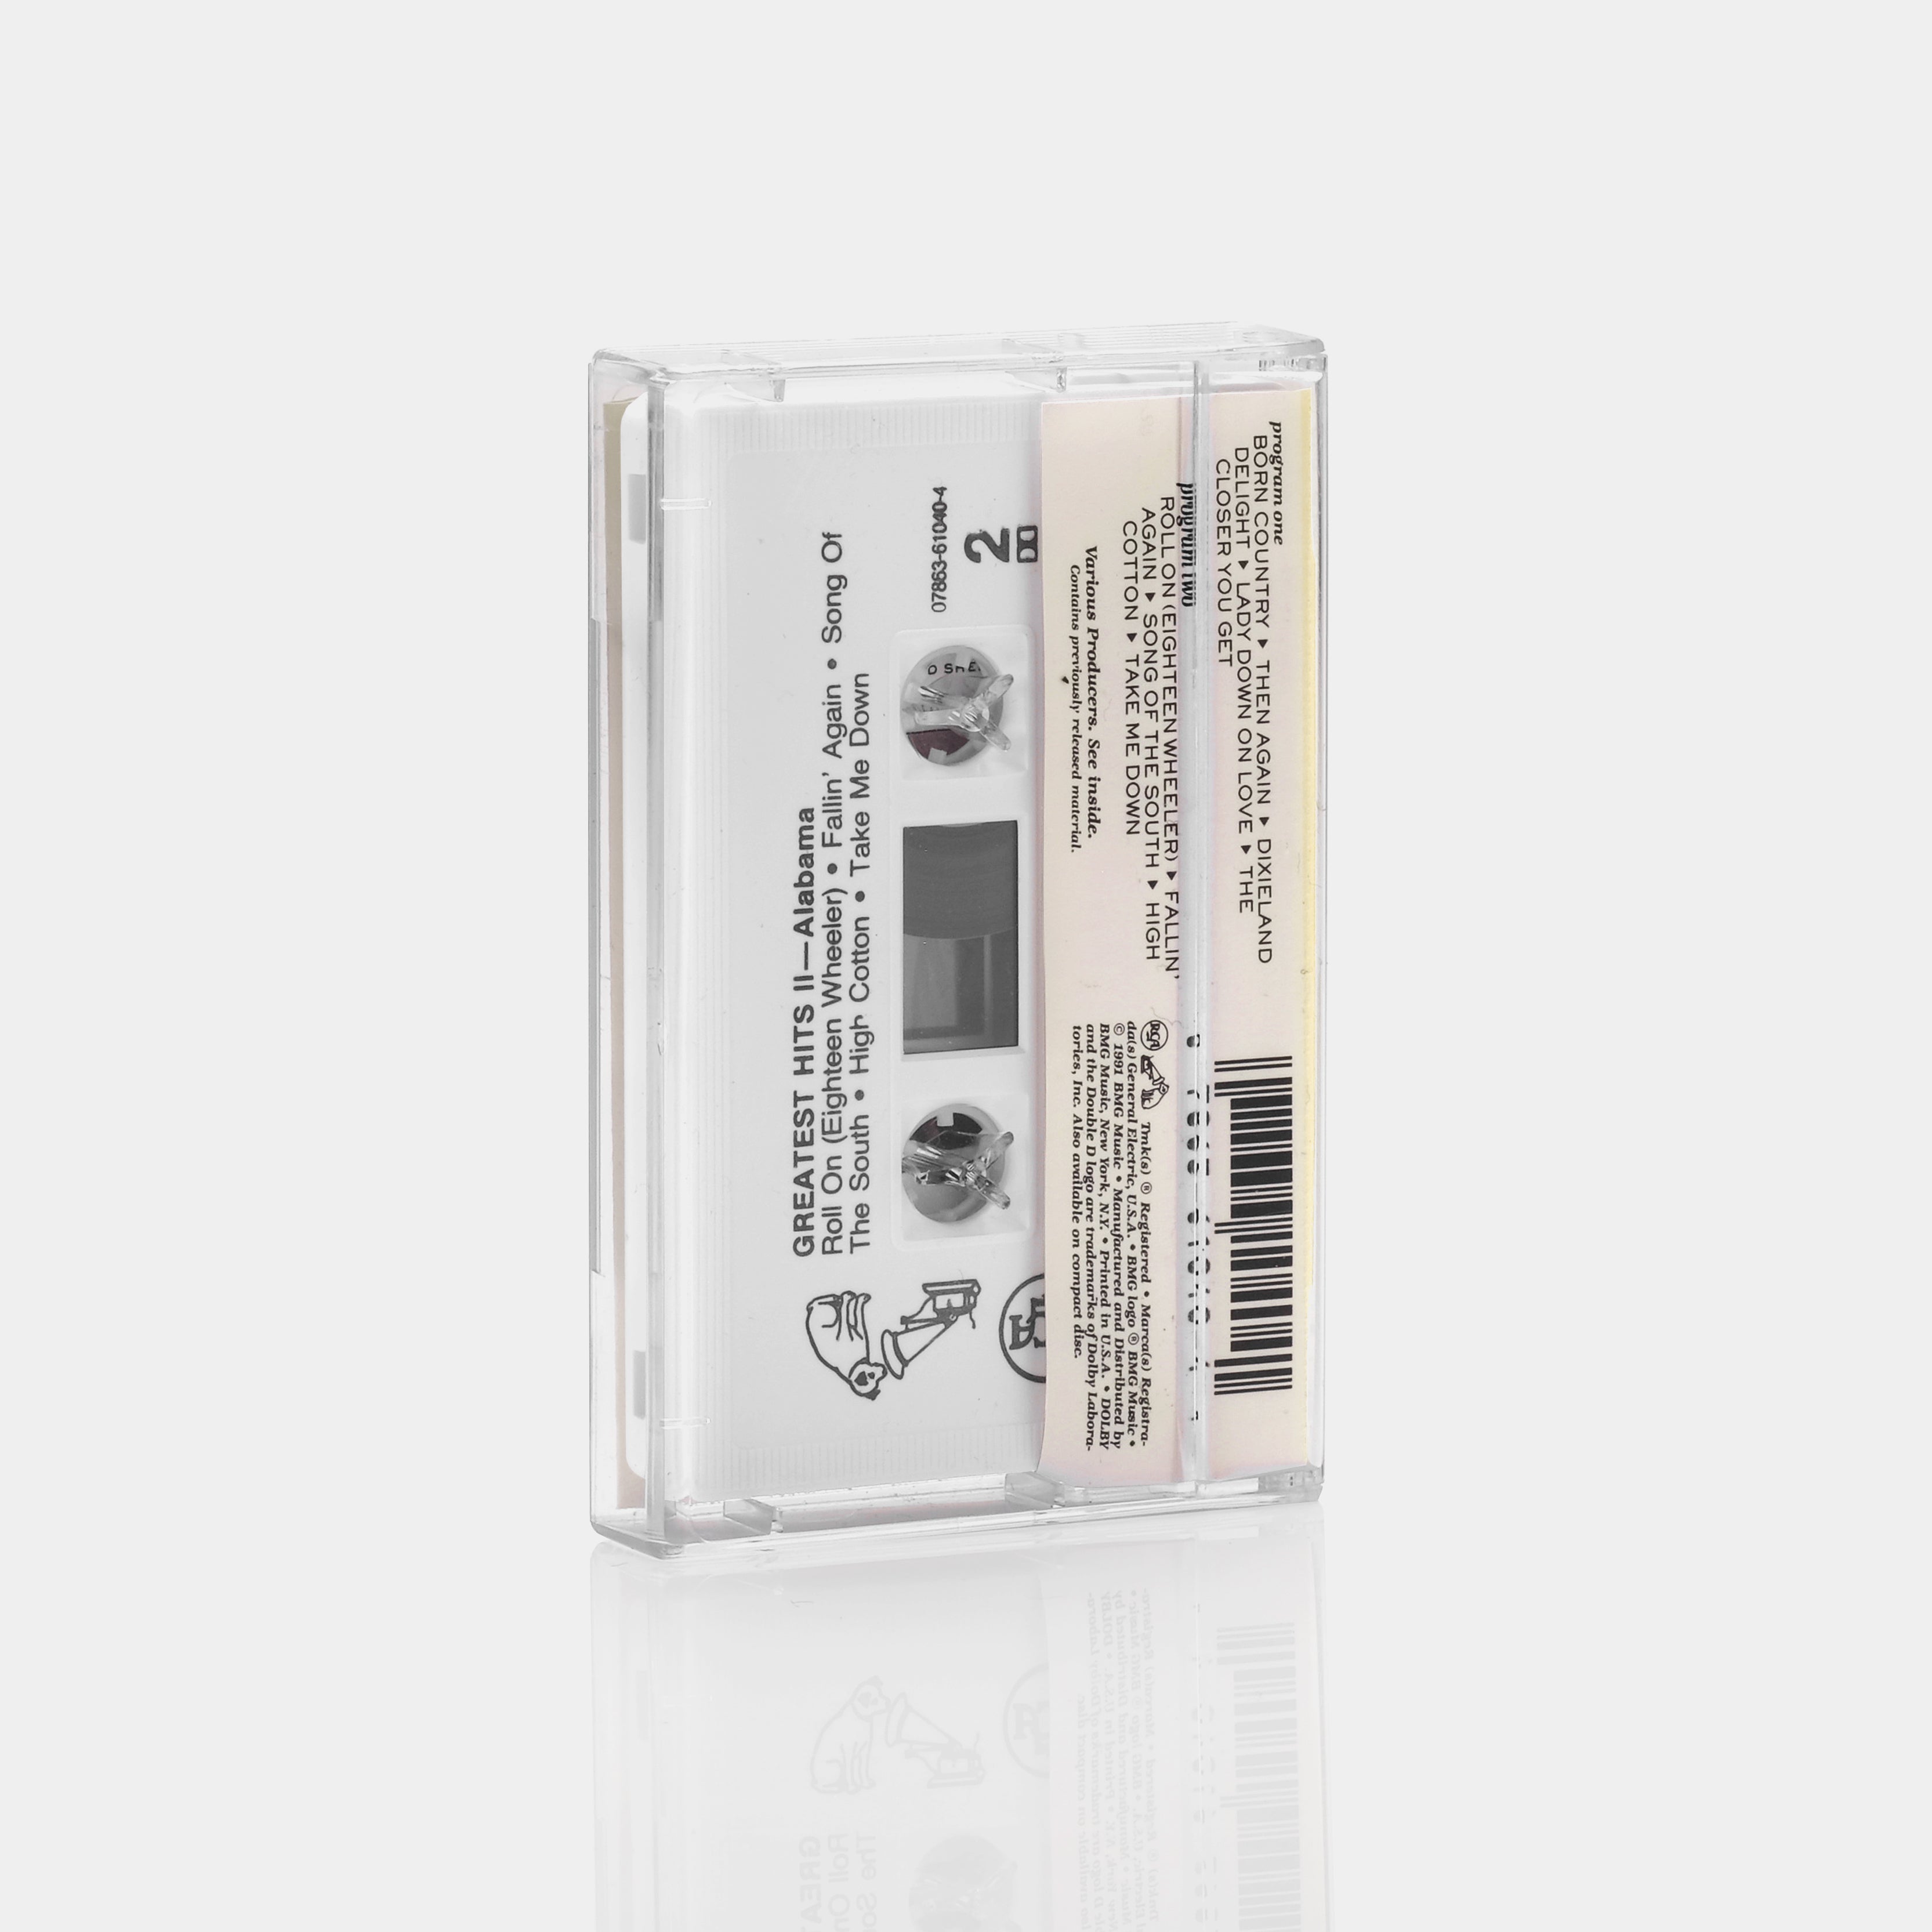 Alabama - Greatest Hits II Cassette Tape